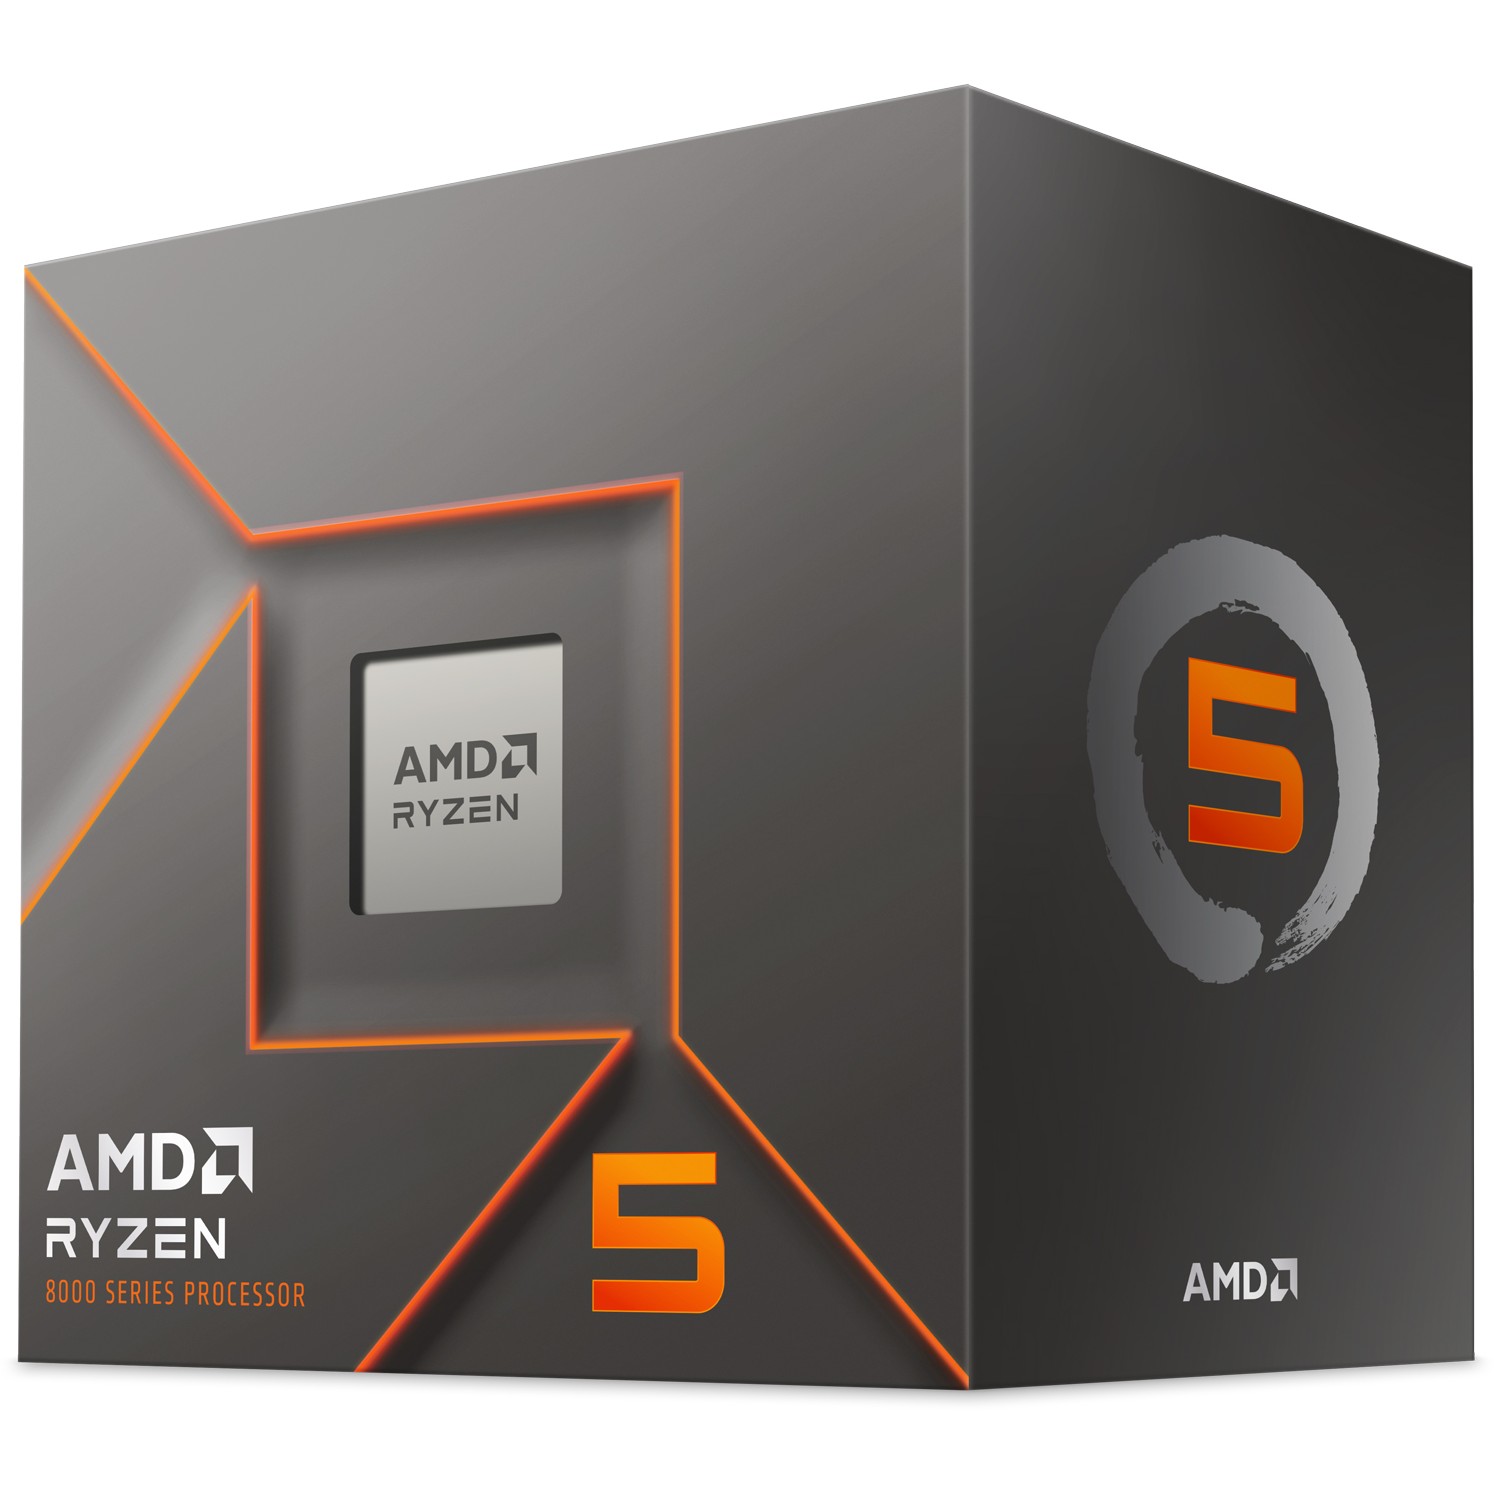 AMD Ryzen 5 8400F processor